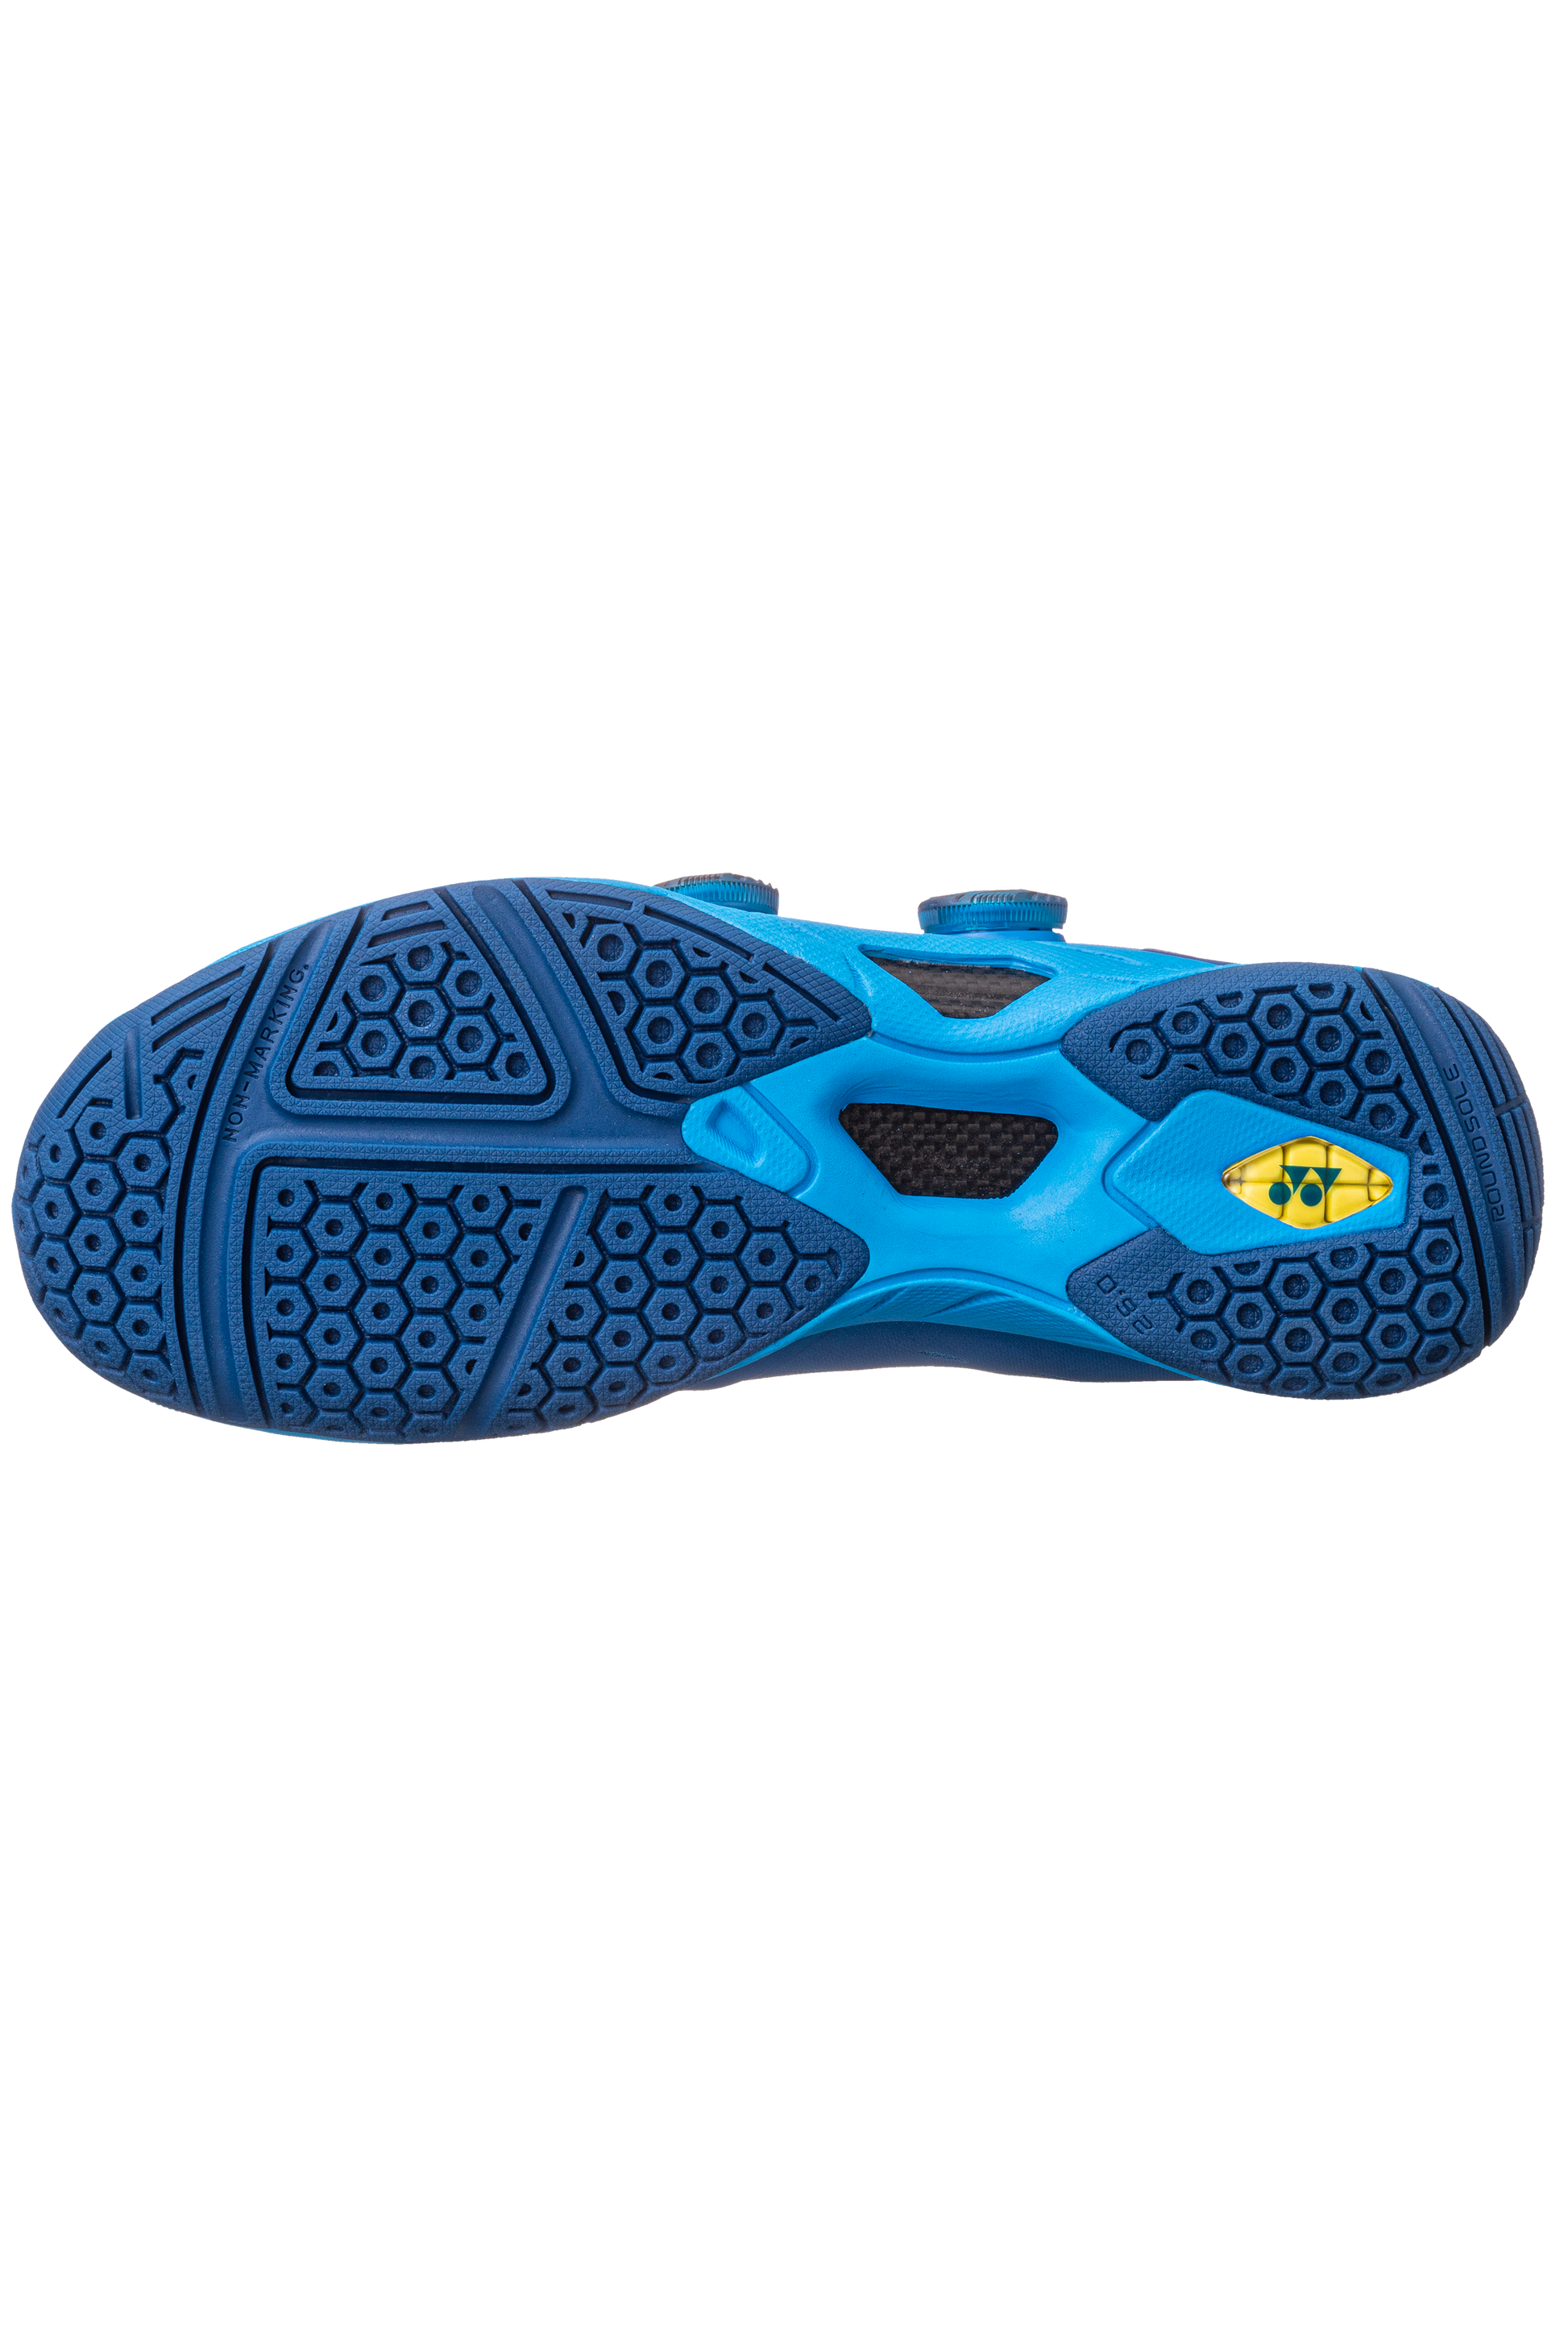 YONEX Badminton Shoes POWER CUSHION INFINITY 2 UNISEX [Metallic Blue] - Max Sports